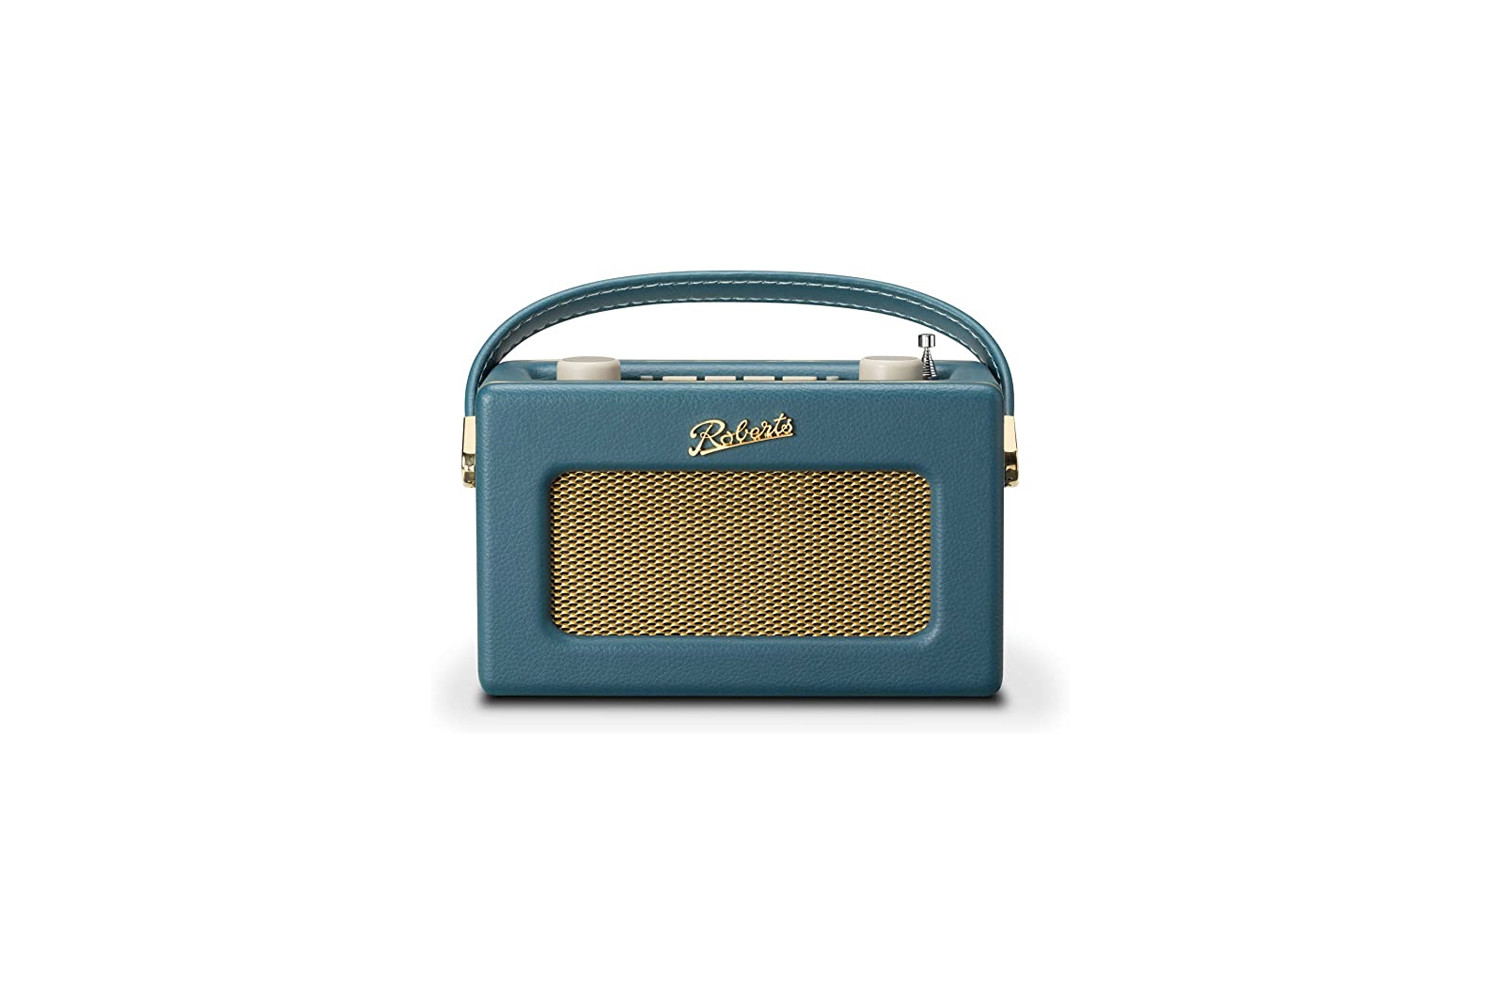 the roberts radio portable radio in teal blue is \$\193.05 on amazon. 22